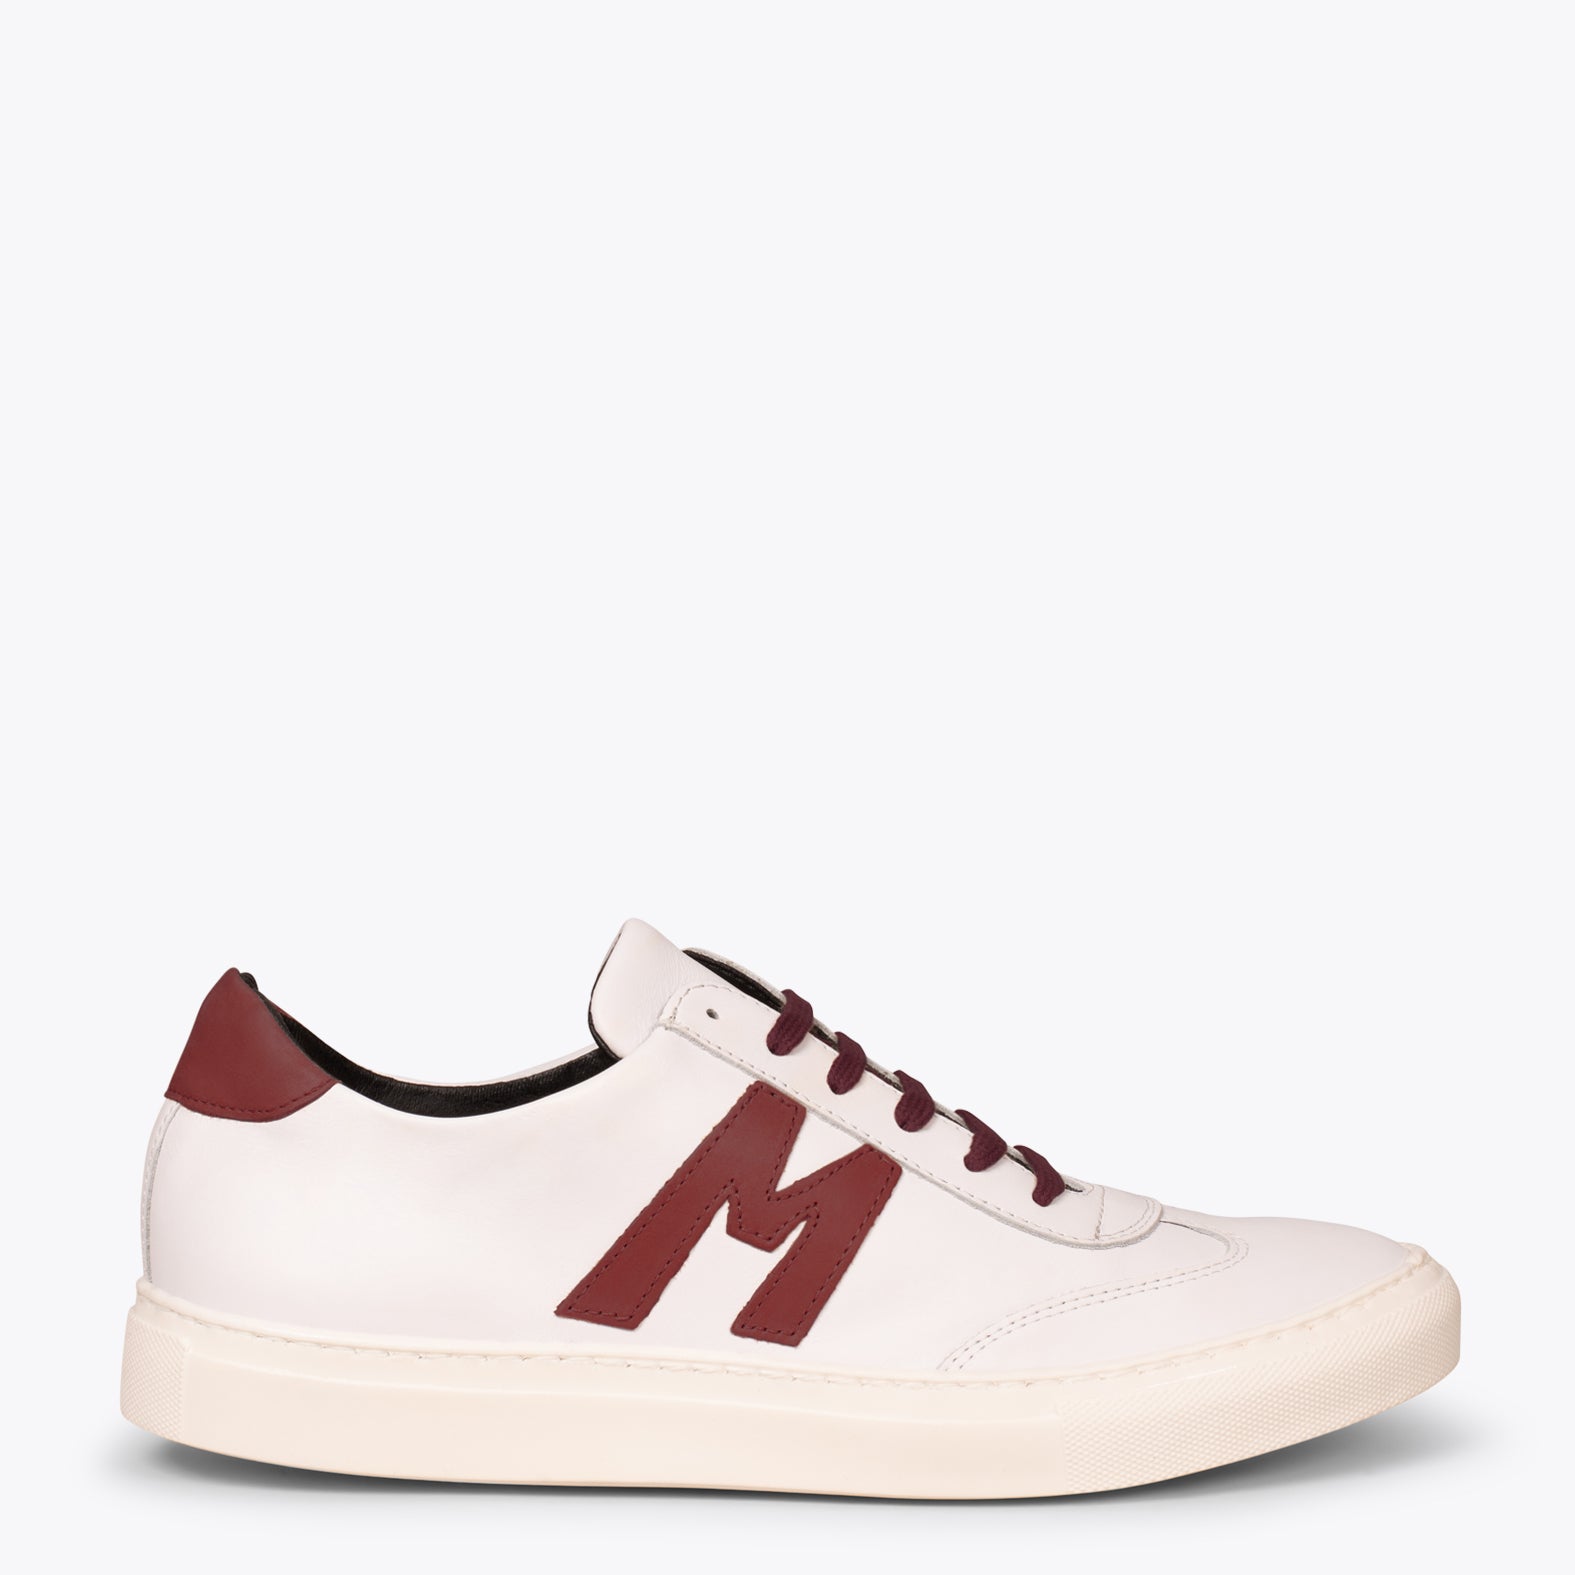 MONACO – BURGUNDY casual sneaker for men